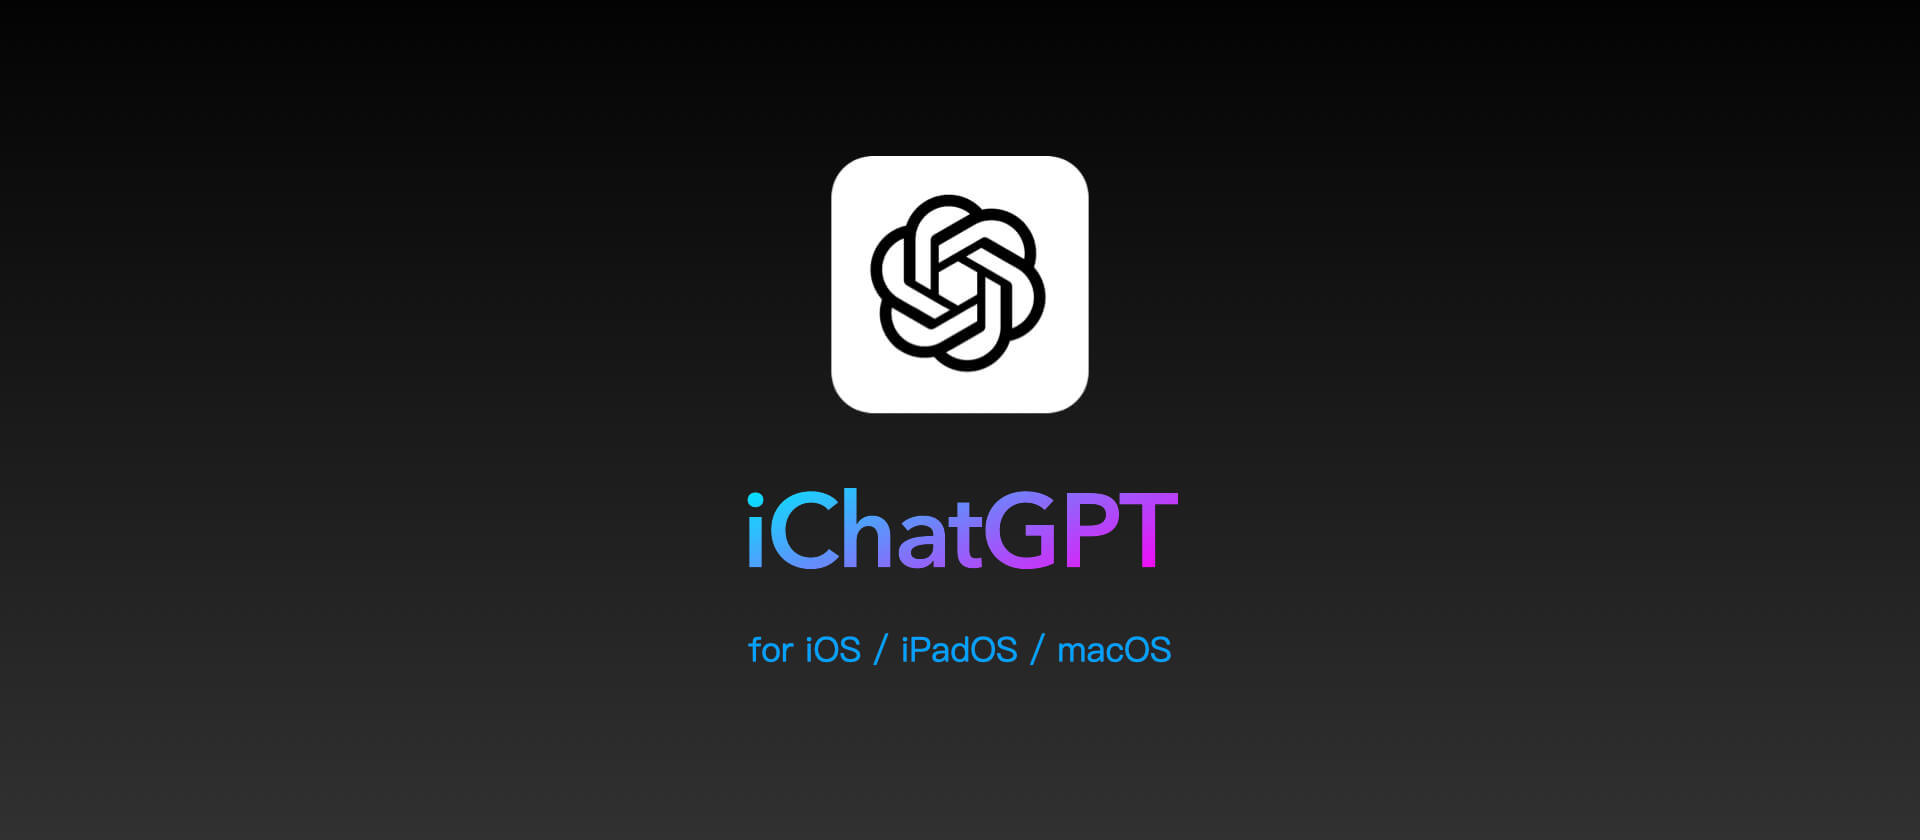 iChatGPT app